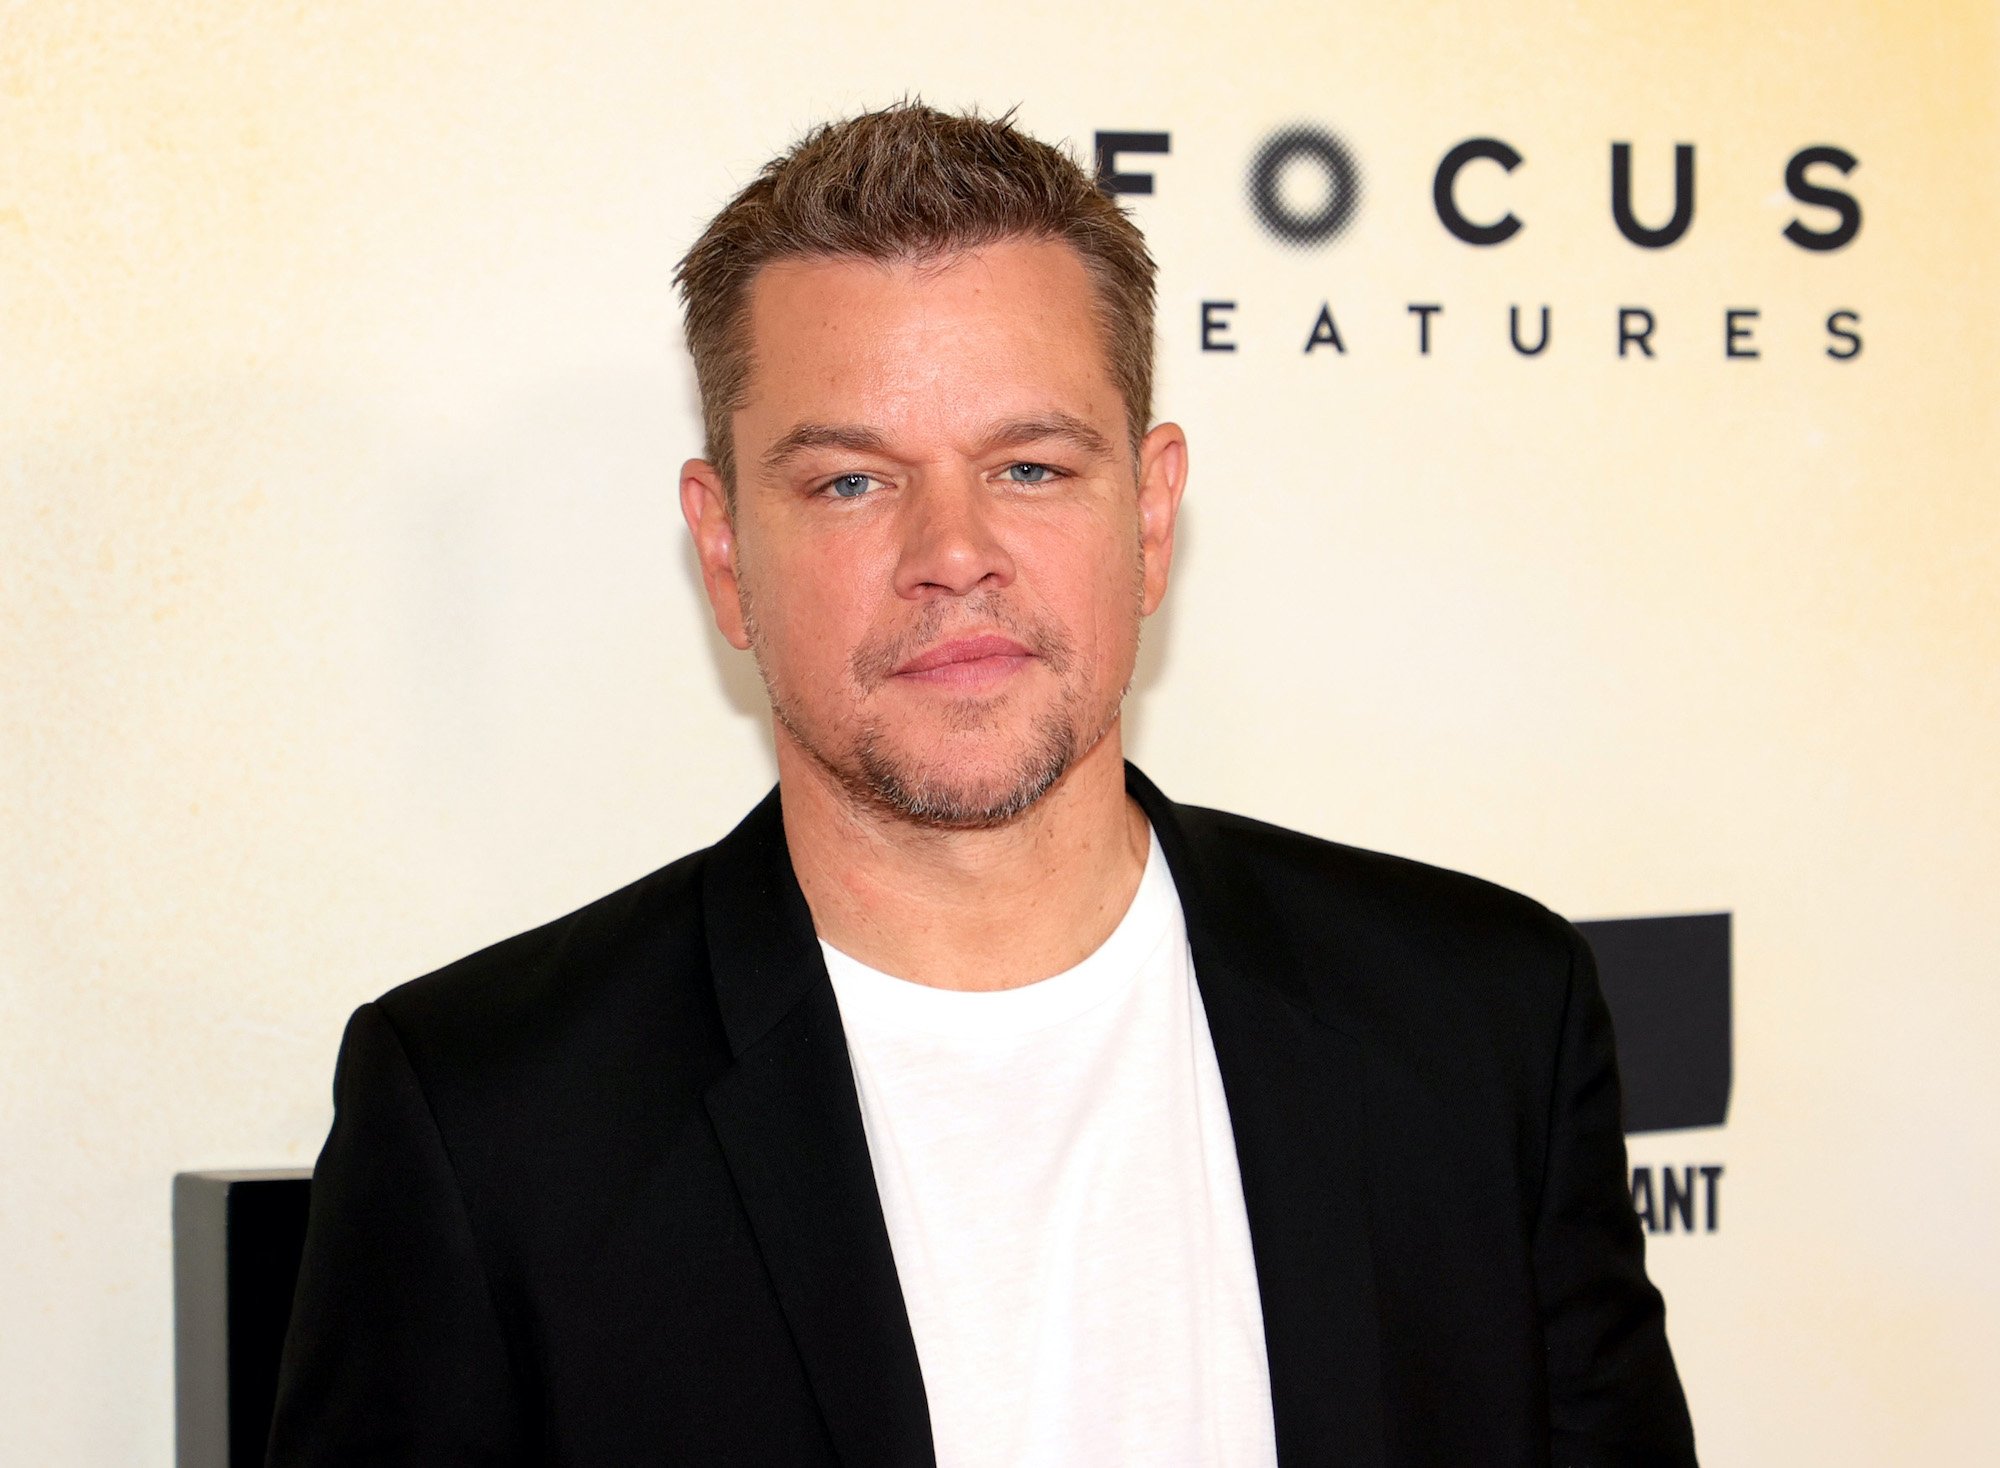 Matt Damon smiling in front of a beige background